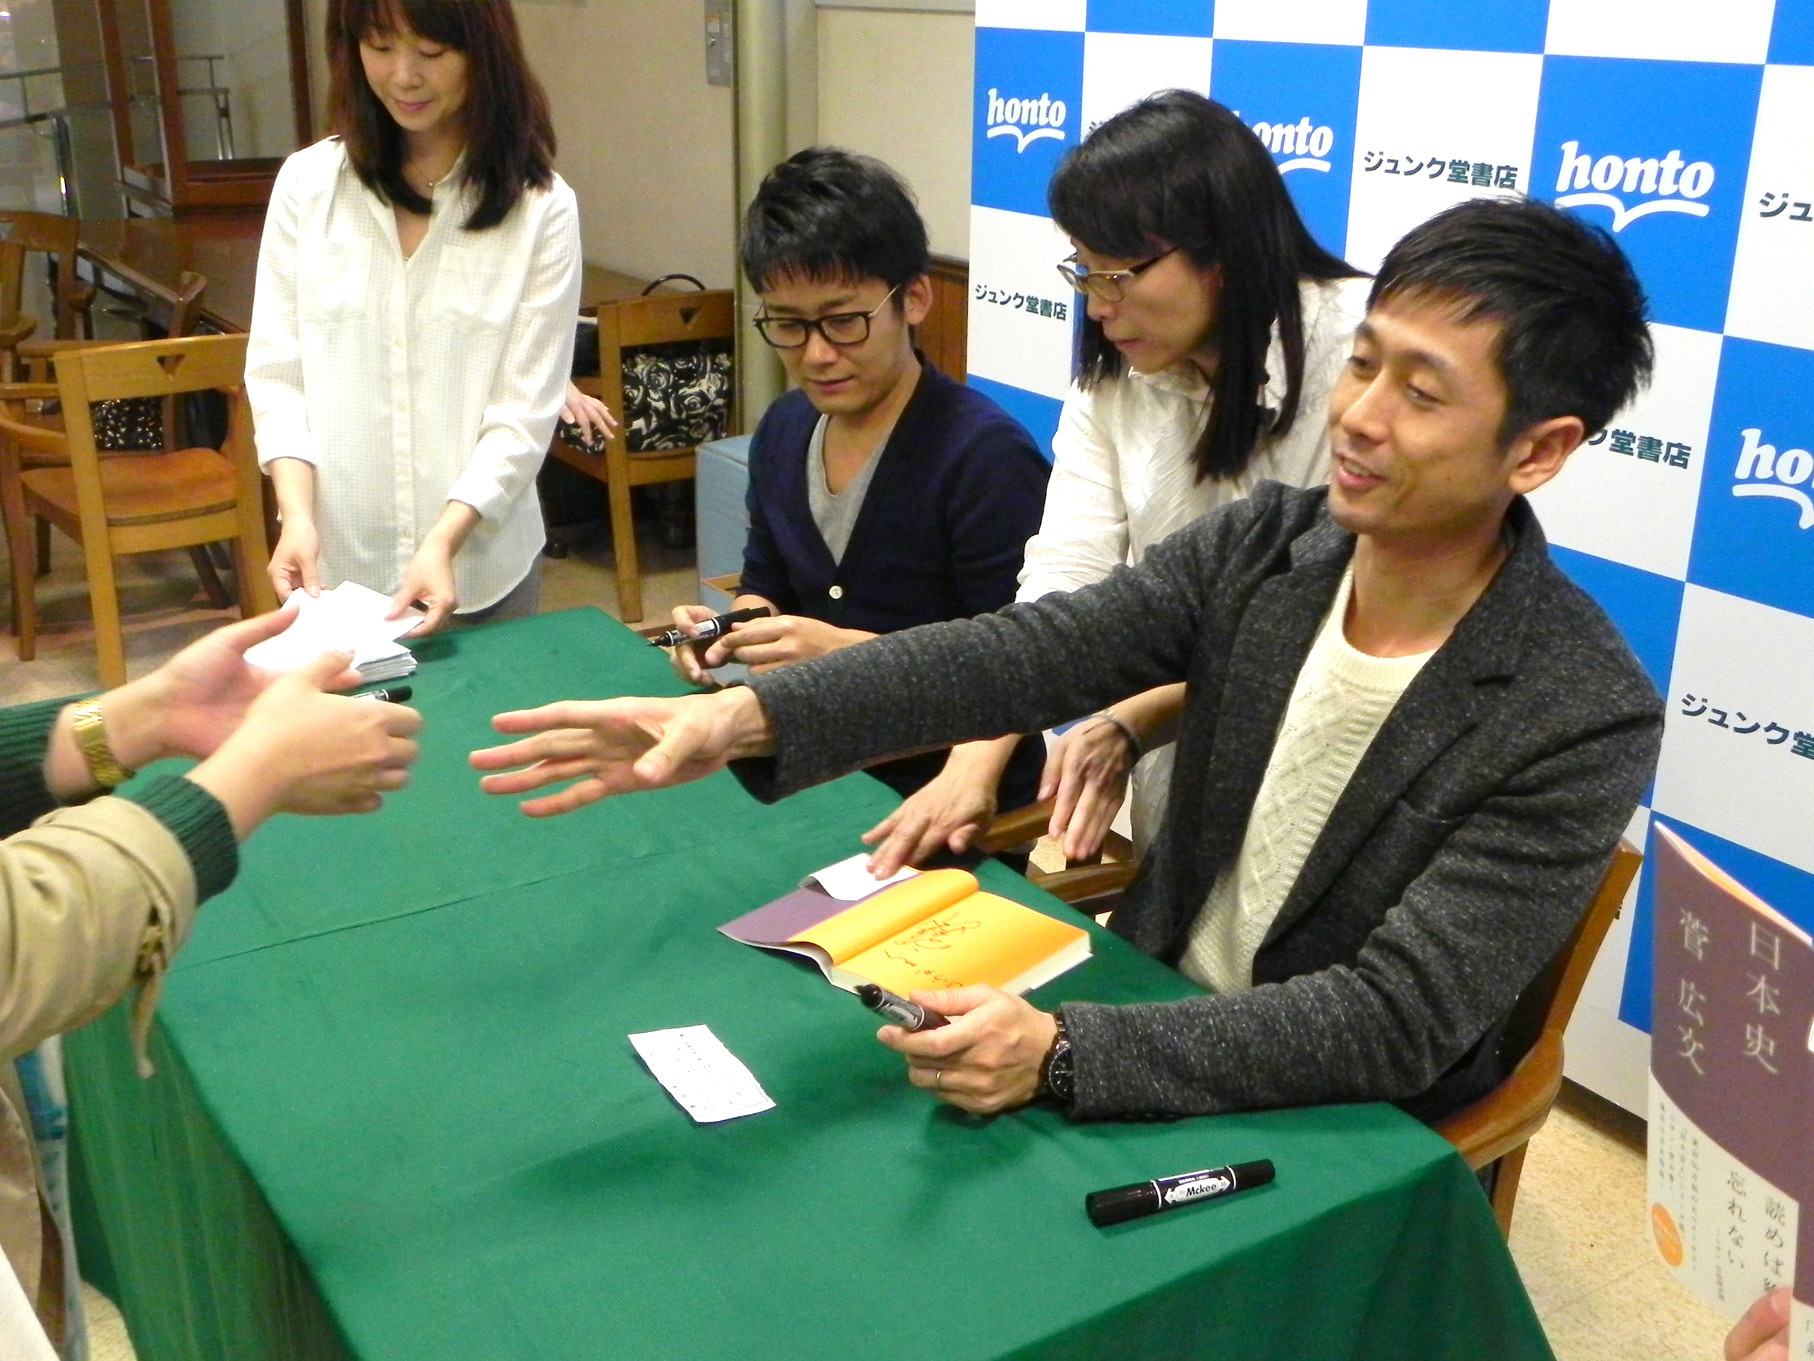 http://news.yoshimoto.co.jp/photos/uncategorized/2014/11/09/DSCN8389.jpg